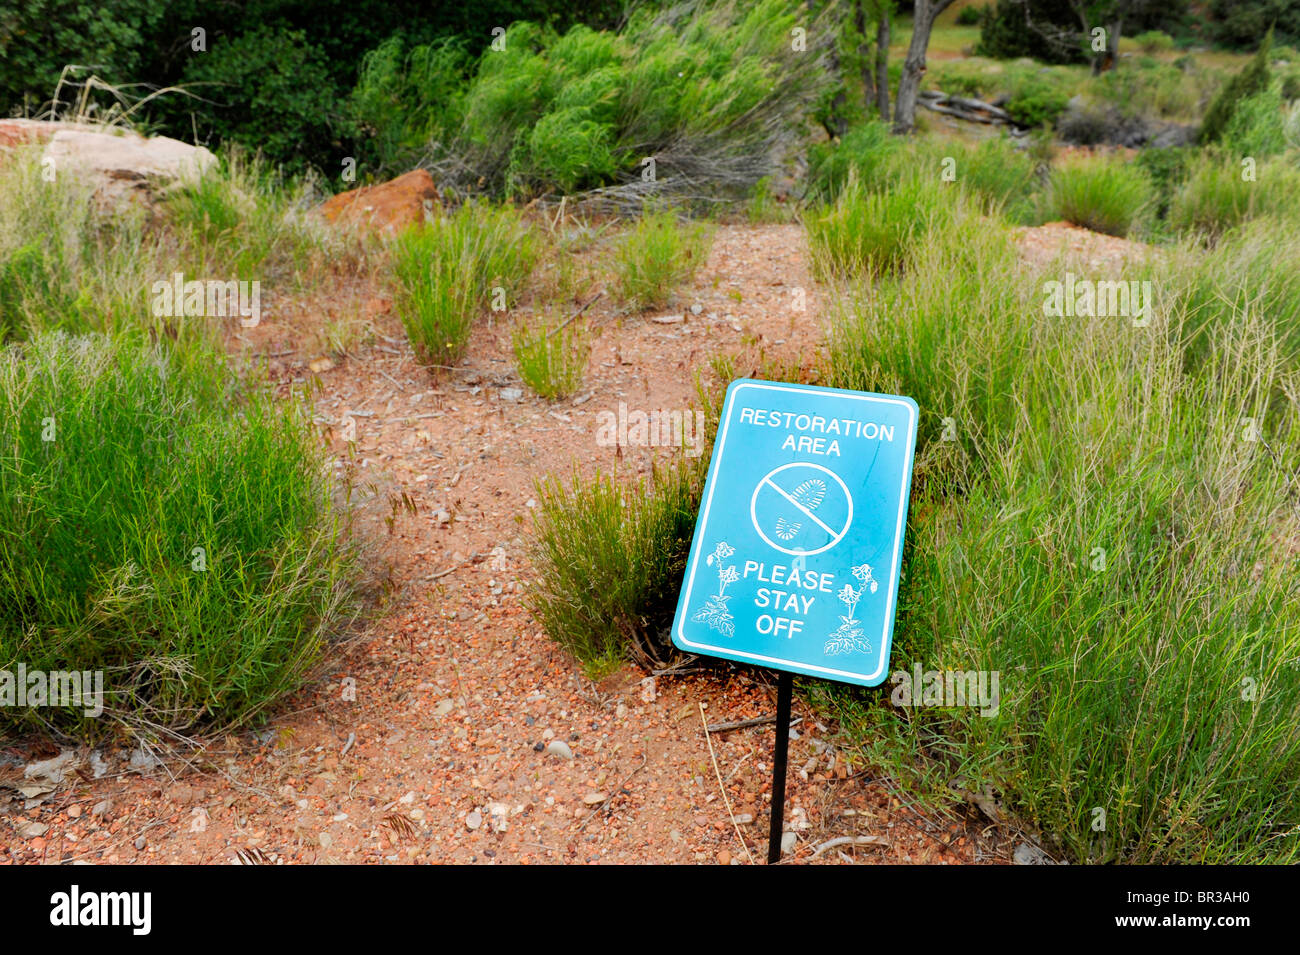 Área de restauración firmar Mount Zion National Park Utah Foto de stock